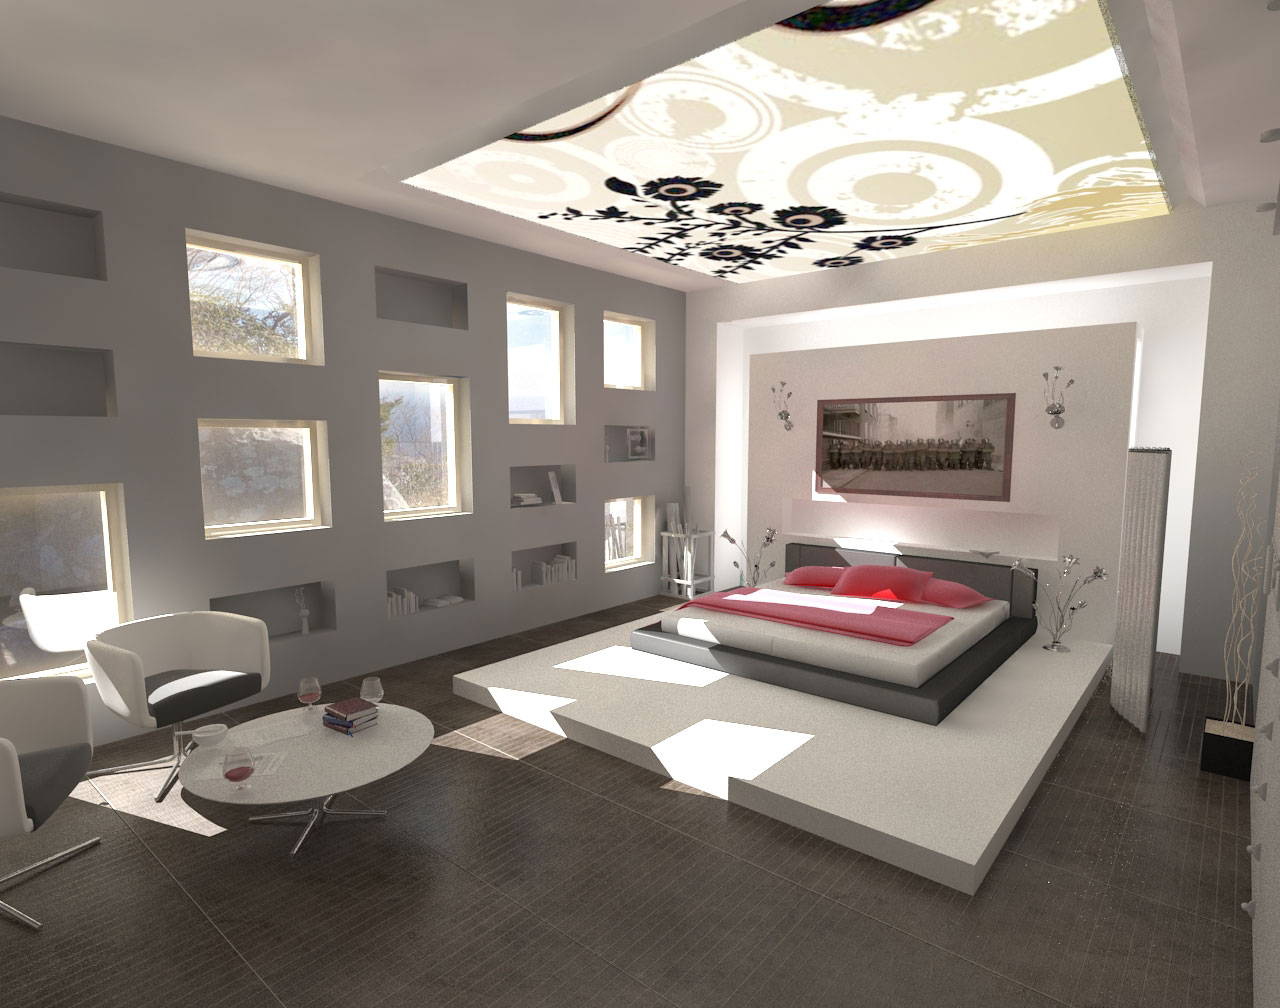 1280x1008px 7 Hottest Interior Bedroom Design Ideas Picture in Bedroom